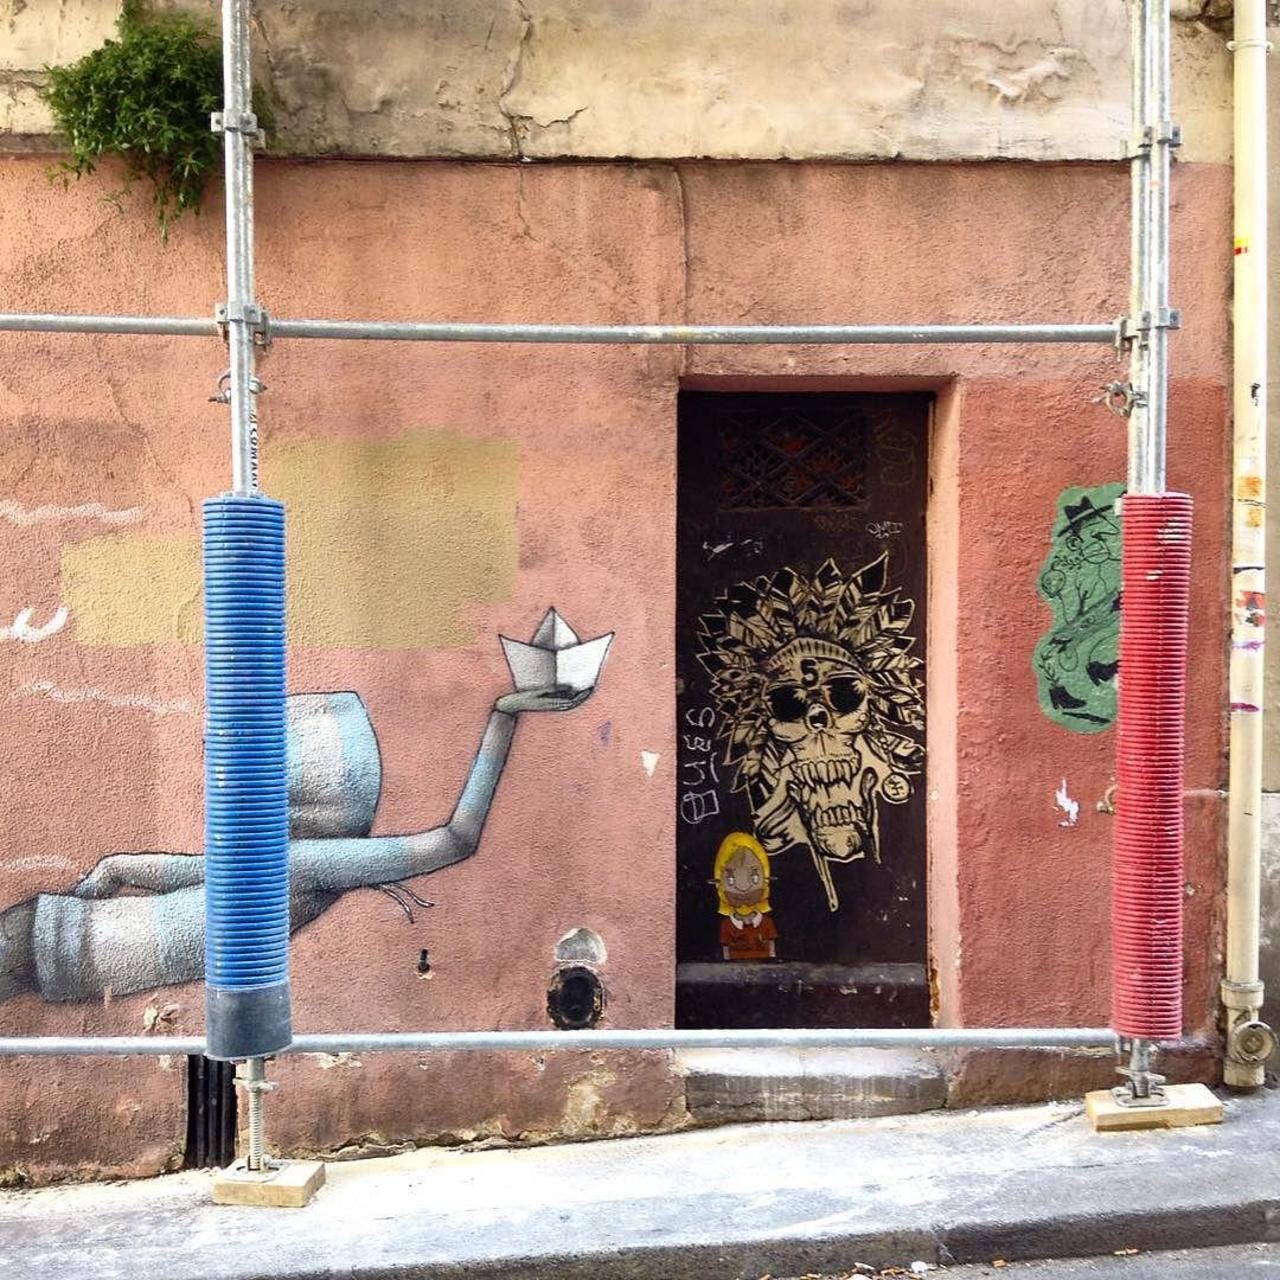 #Paris #graffiti photo by @fleurs.de.sel http://ift.tt/1NcBkPA #StreetArt http://t.co/rOGLROyMVX